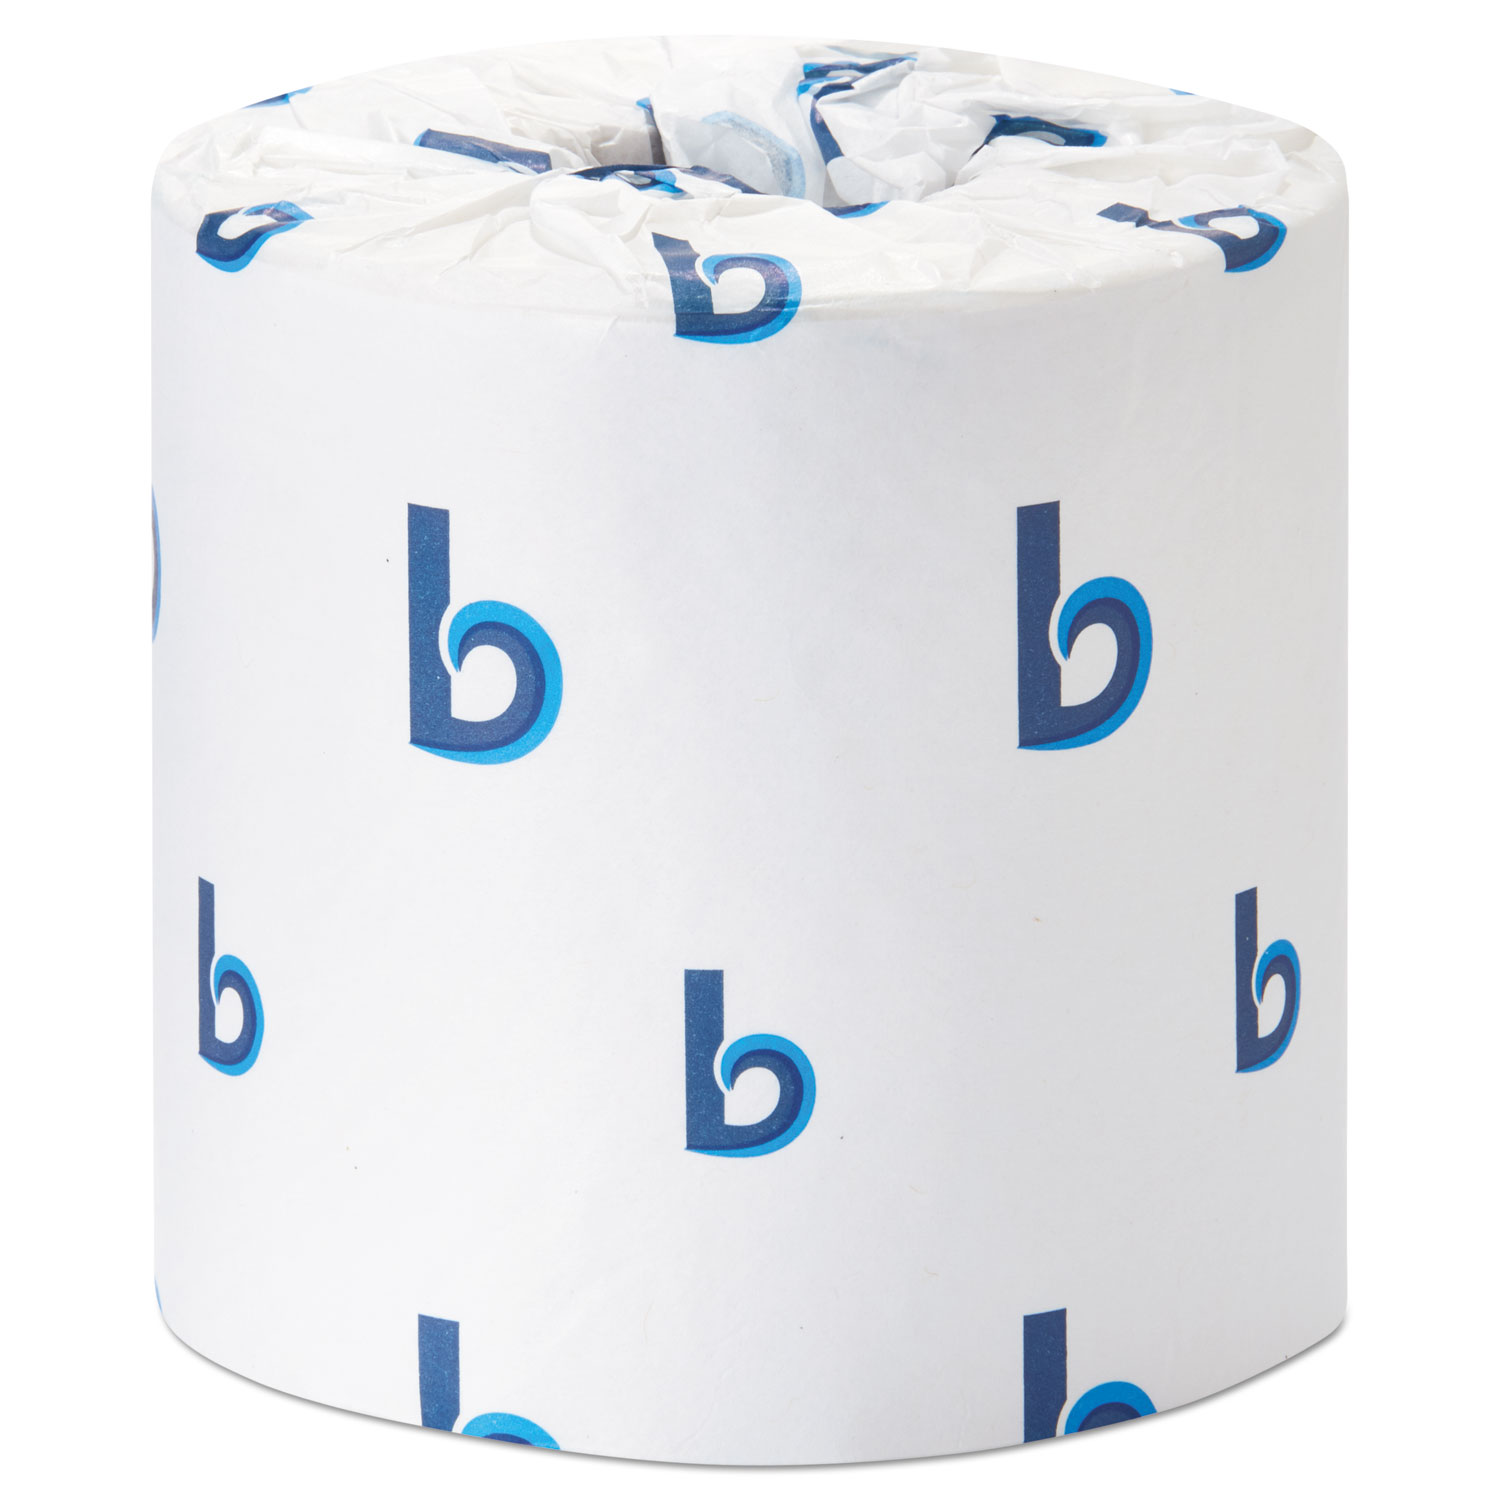  Boardwalk 4713 Office Packs Standard Bathroom Tissue, Septic Safe, 2-Ply, White, 350 Sheets/Roll, 48 Rolls/Carton (BWK6148) 